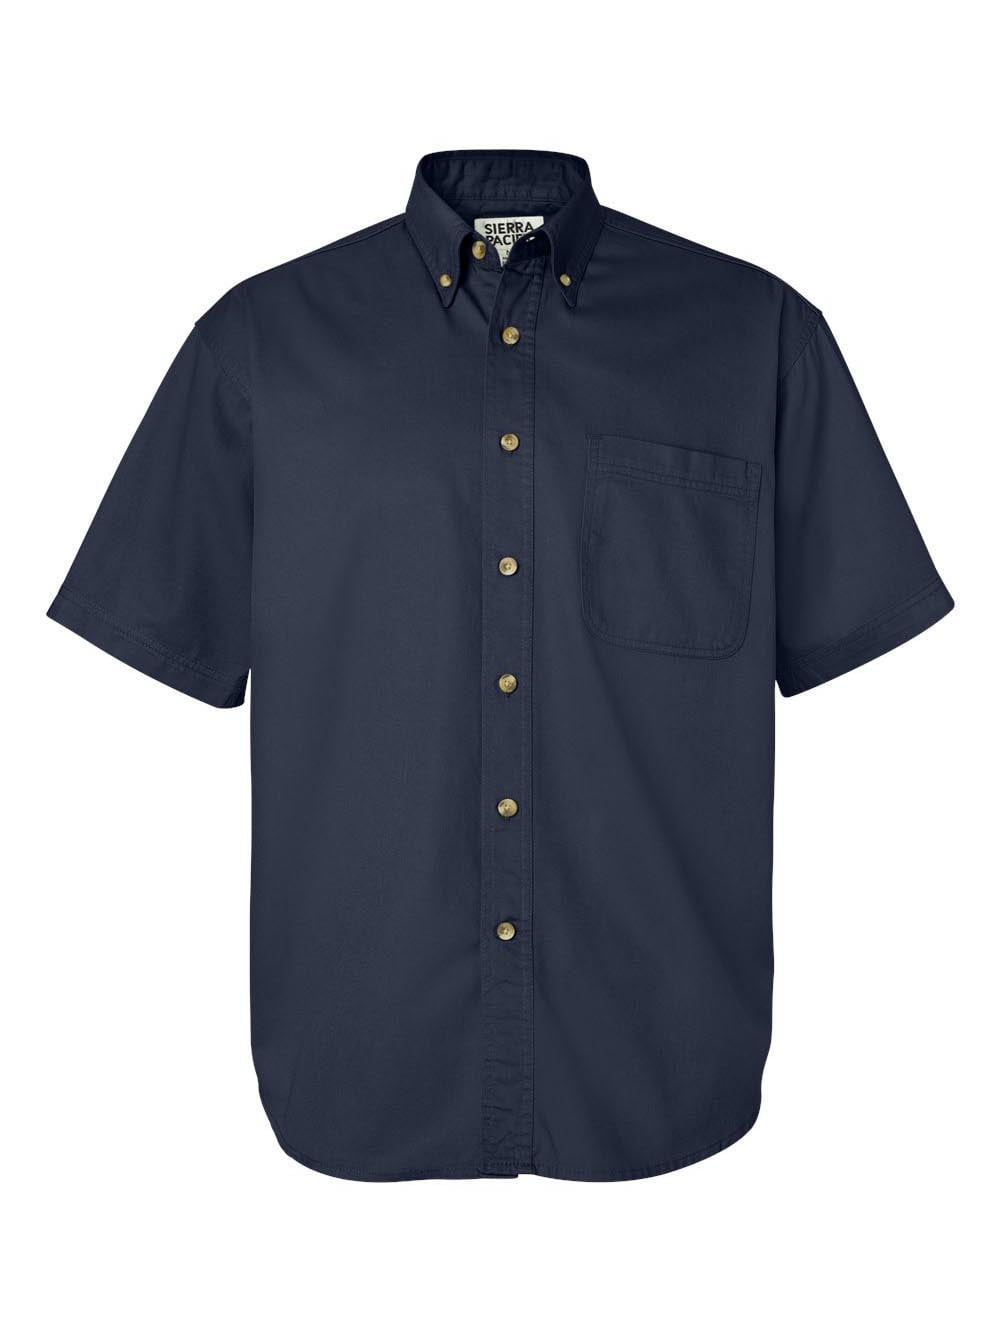 Sierra Pacific - Short Sleeve Cotton Twill Shirt - 0201 - Walmart.com